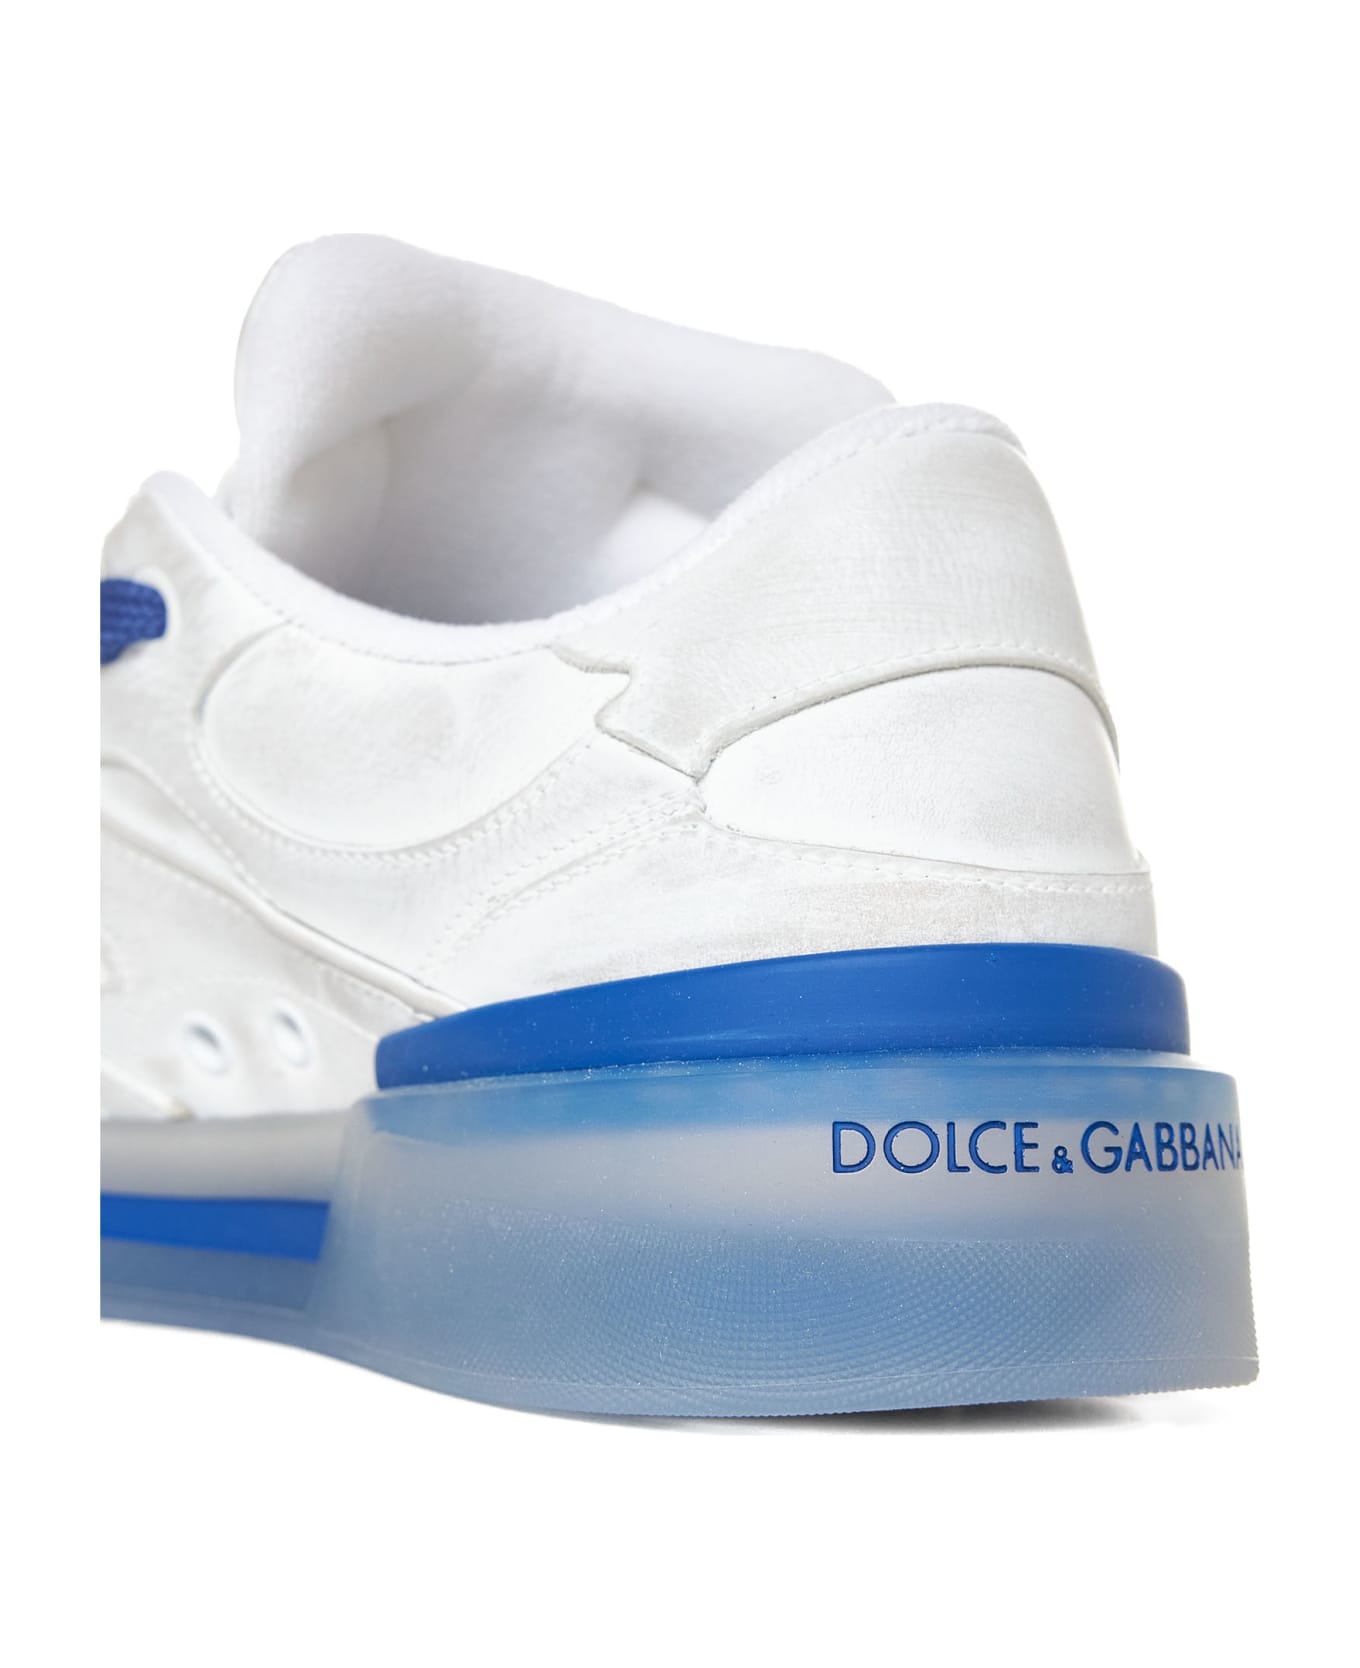 Dolce & Gabbana Sneakers - Bianco/bluette スニーカー